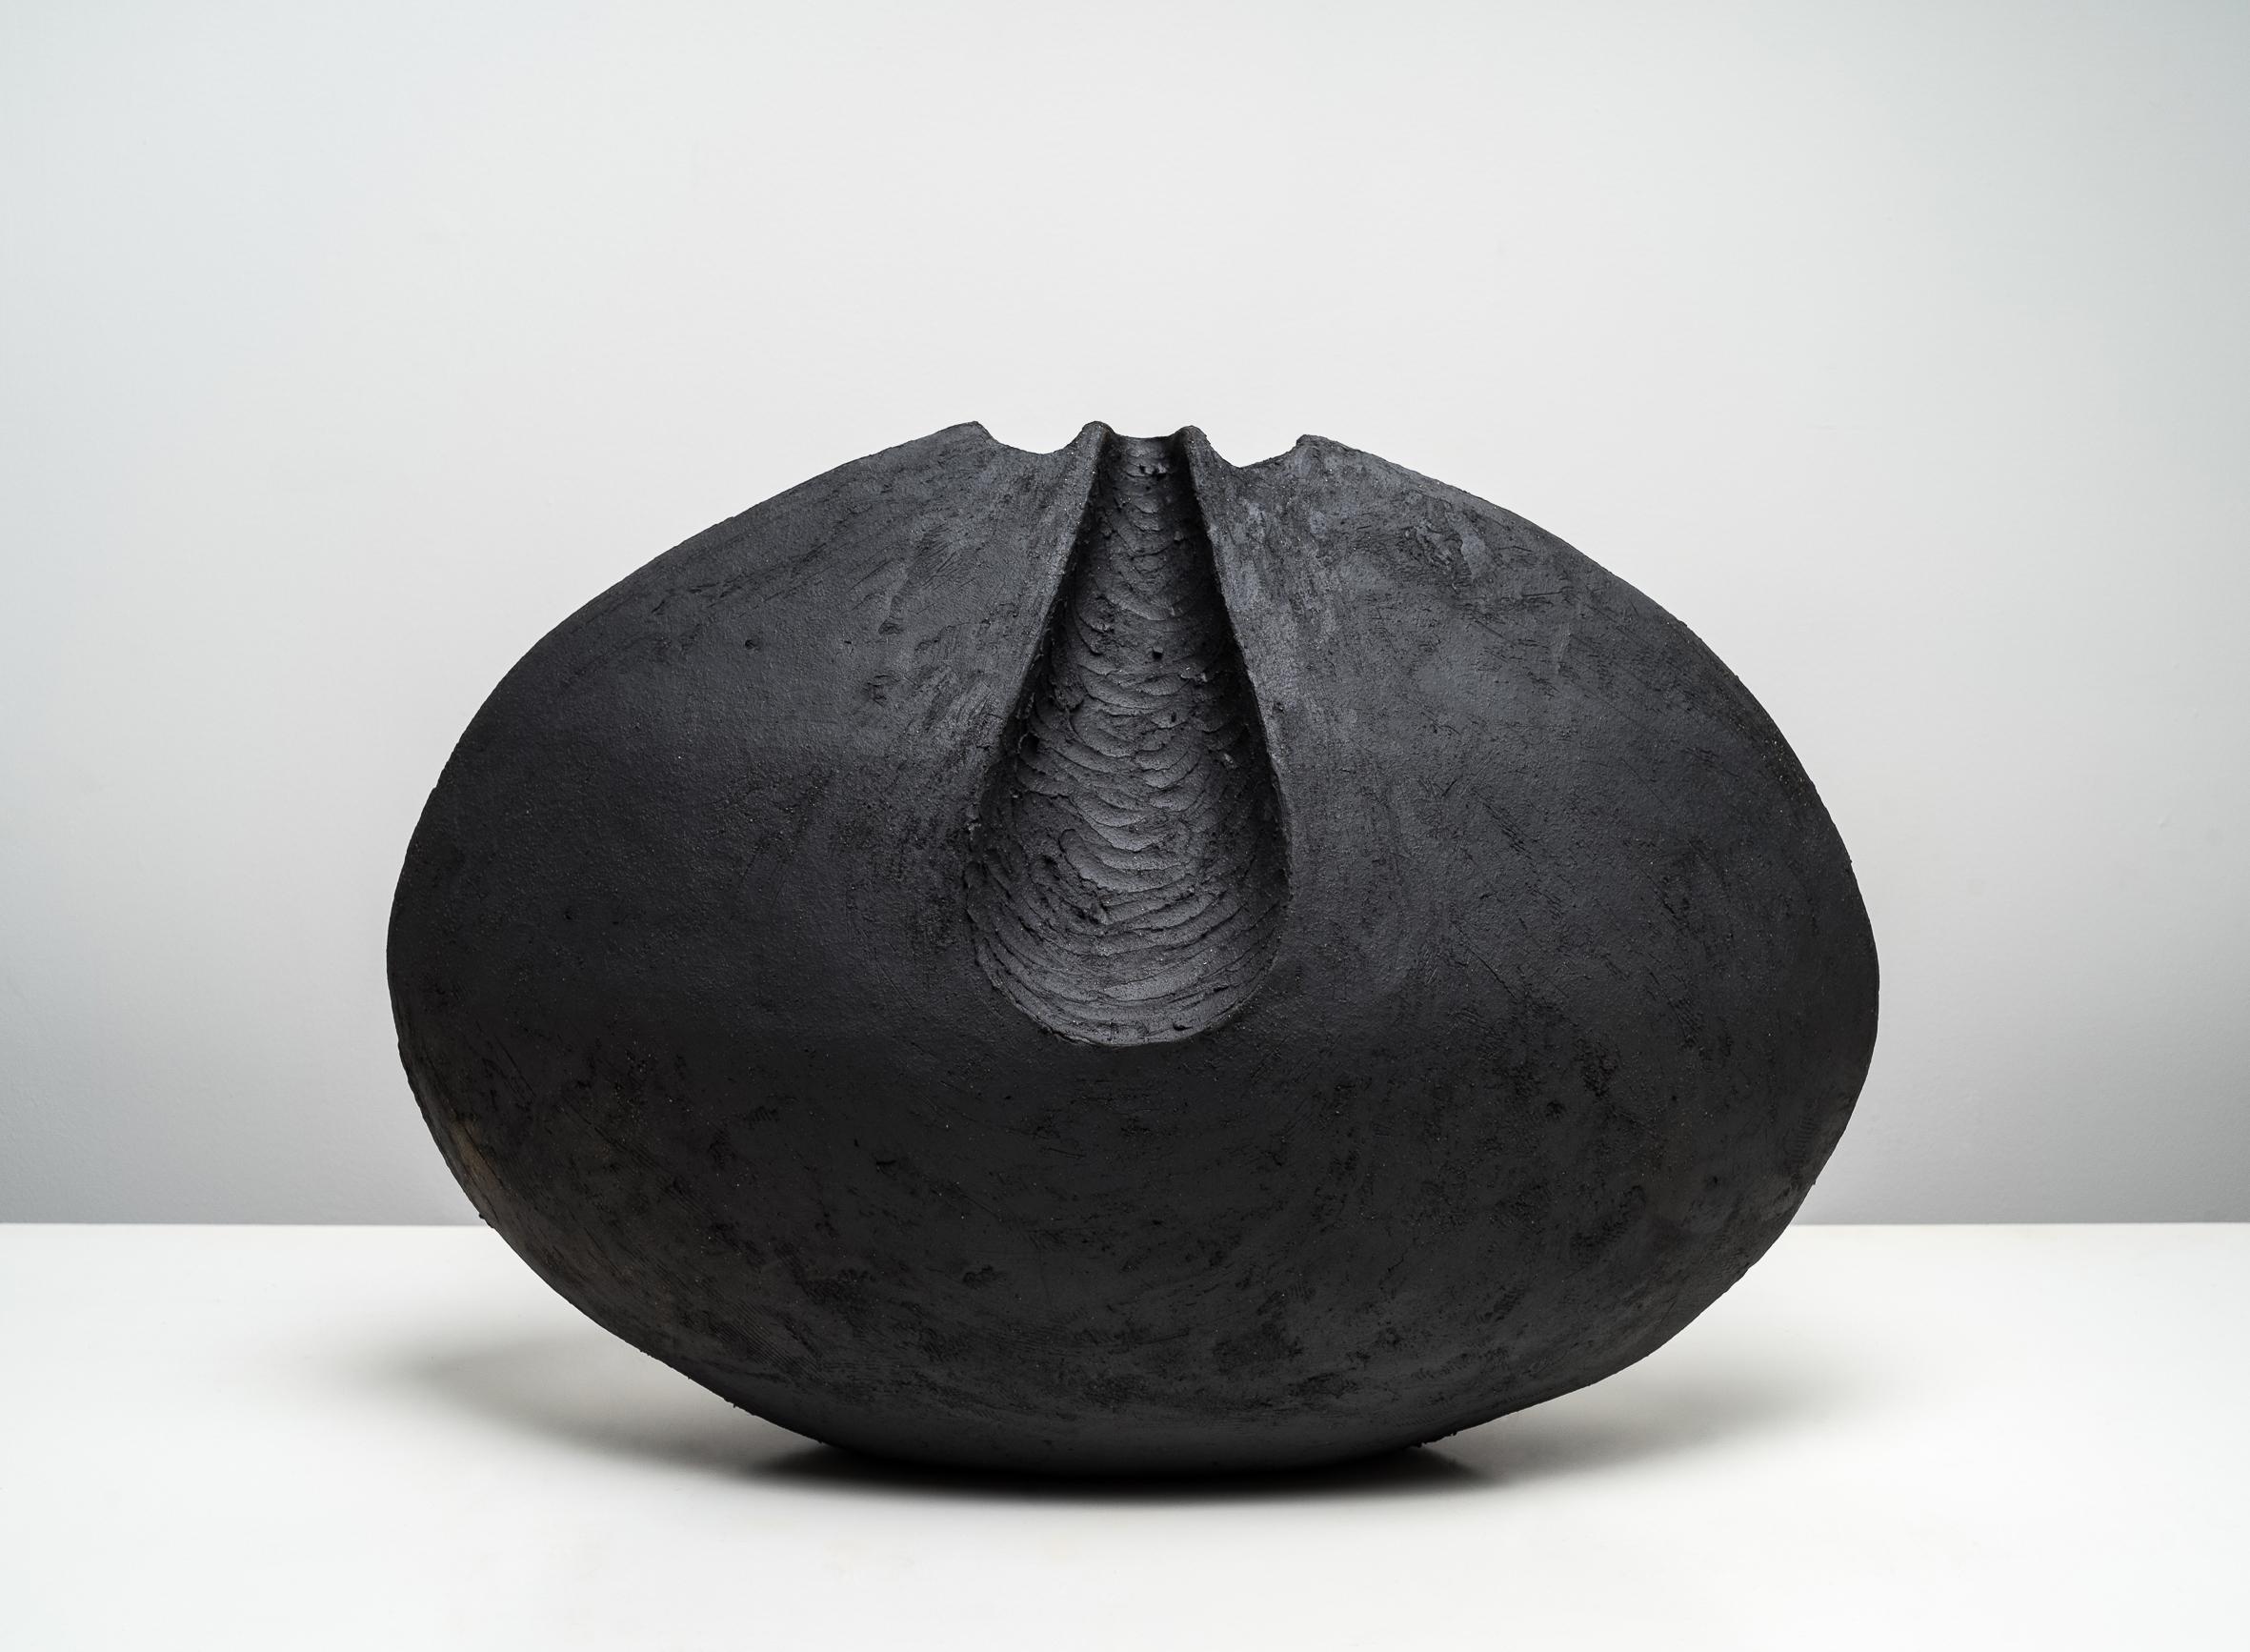 Abstract Sculpture Beverly Morrison - Sculpture abstraite en argile, Belly, 2019